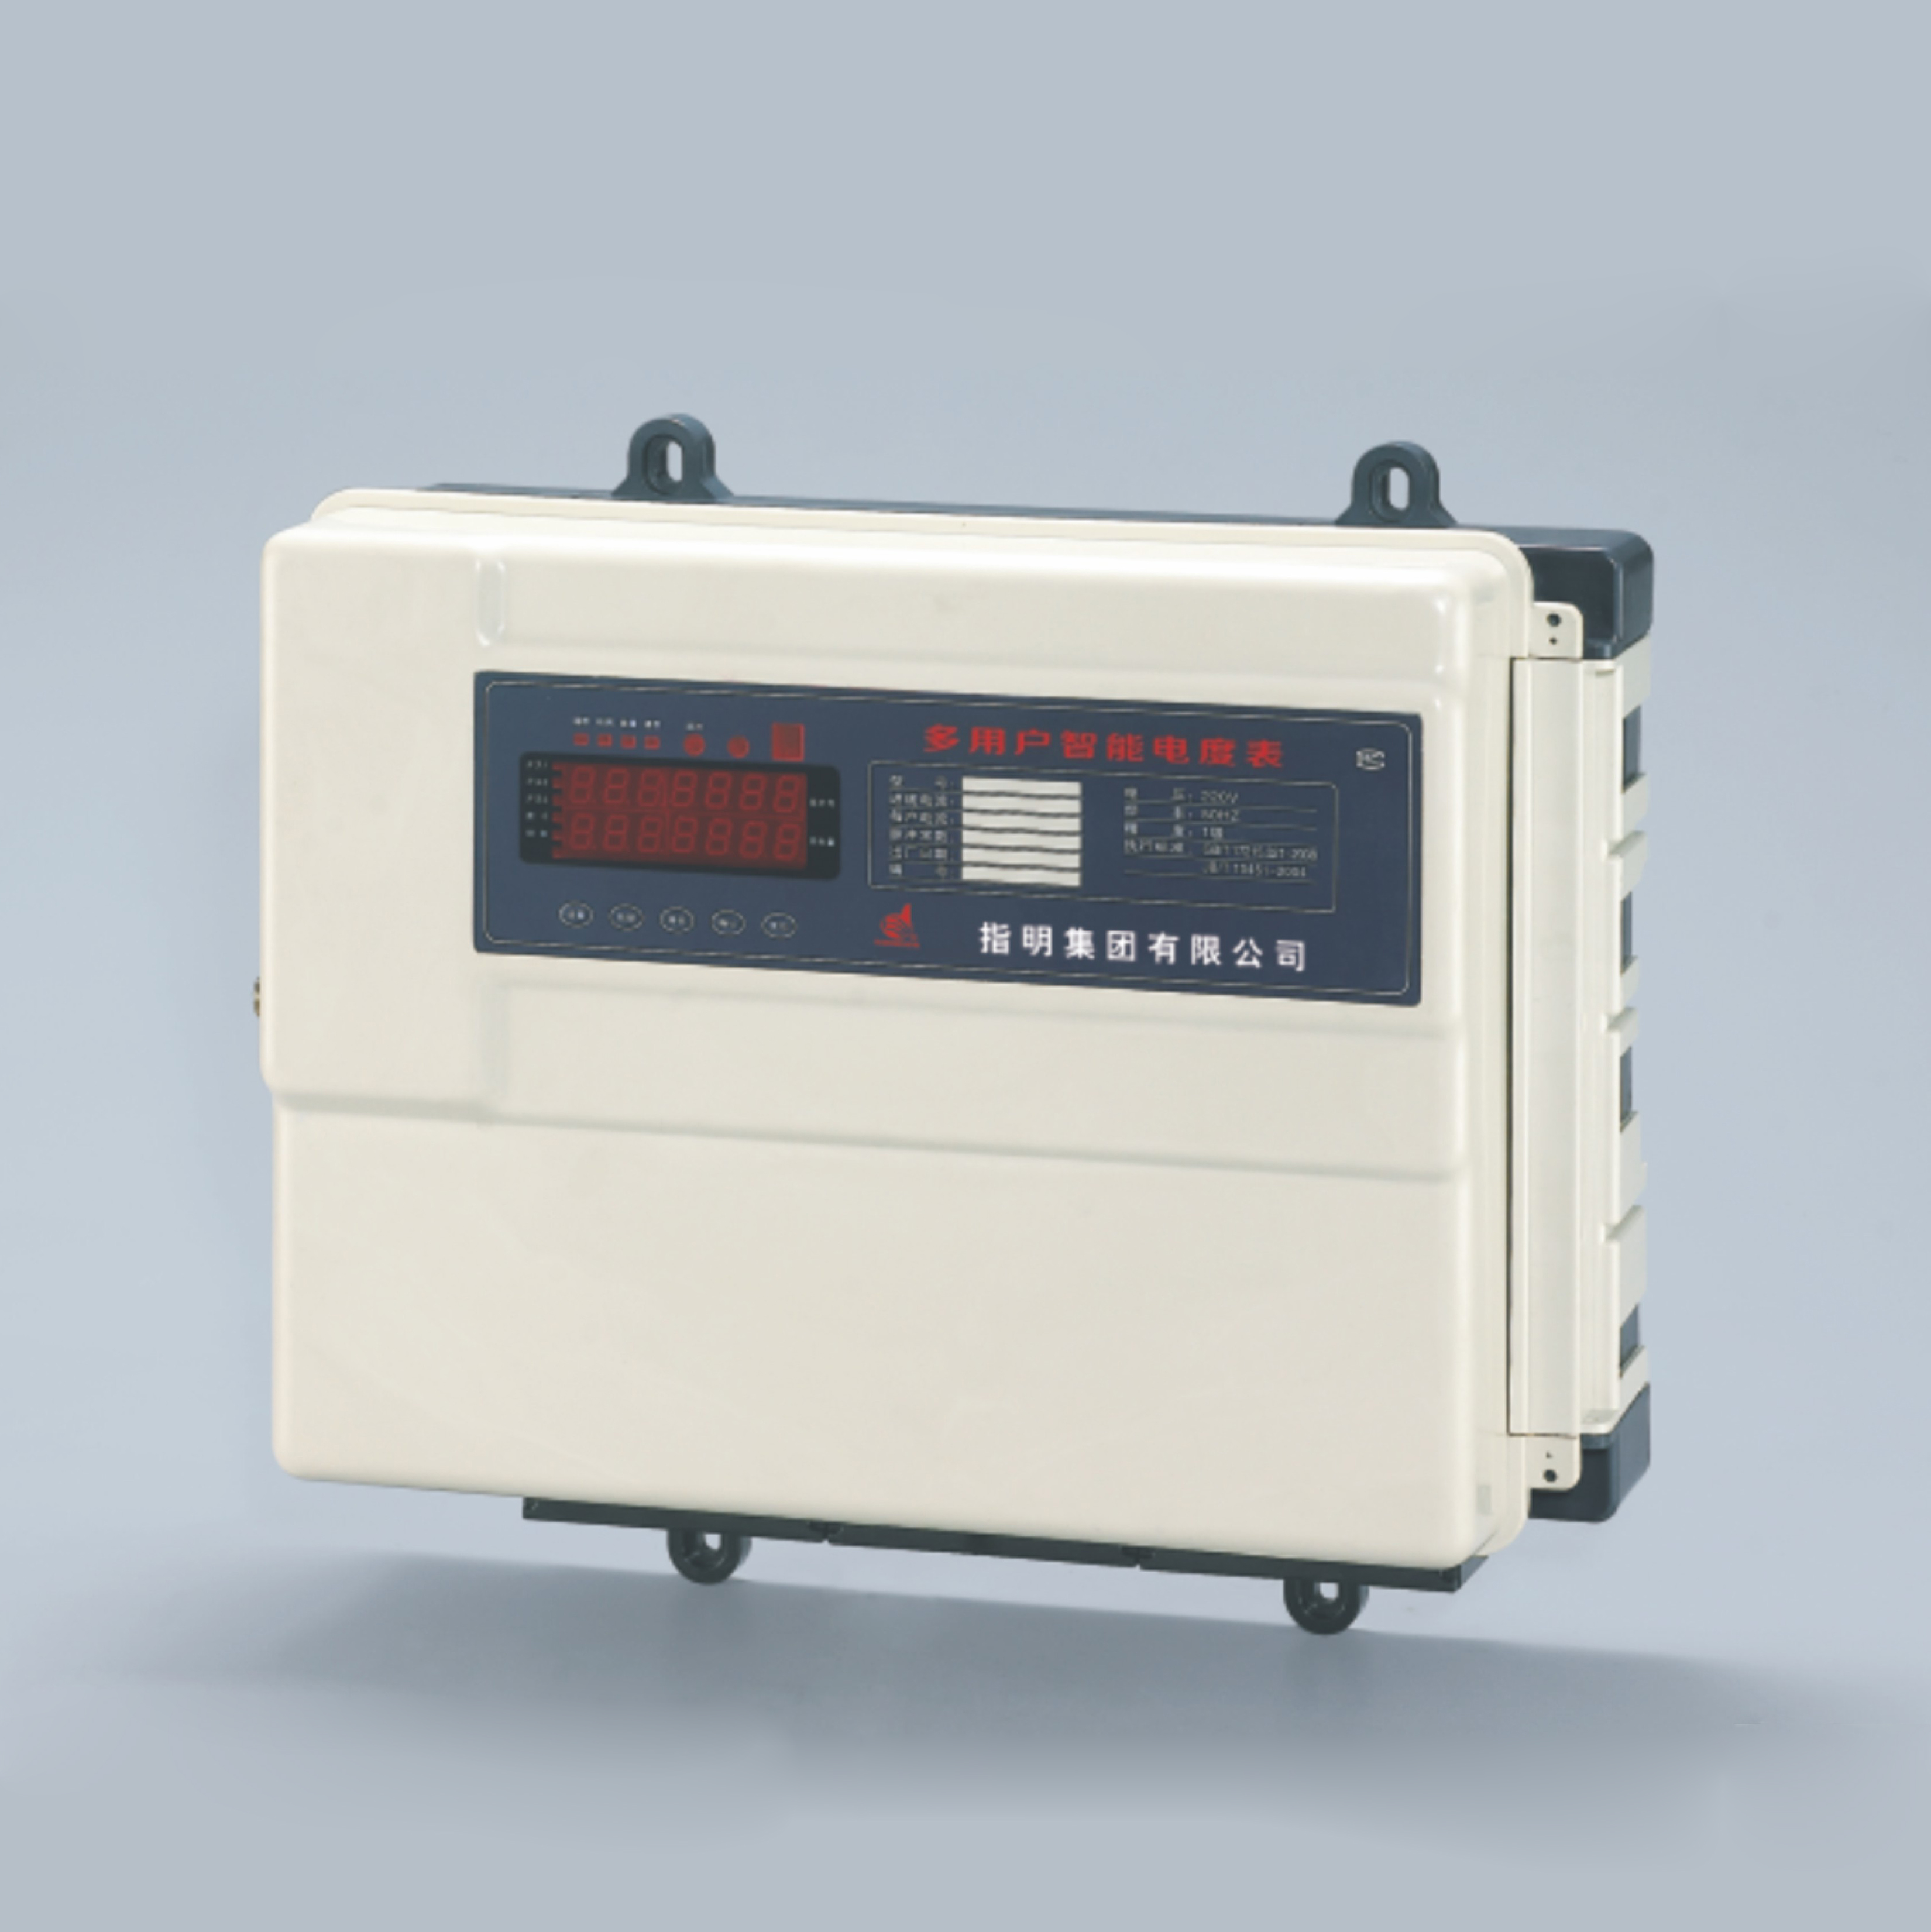 DDSH450 series electronic three-phase carrier watt-hour meters